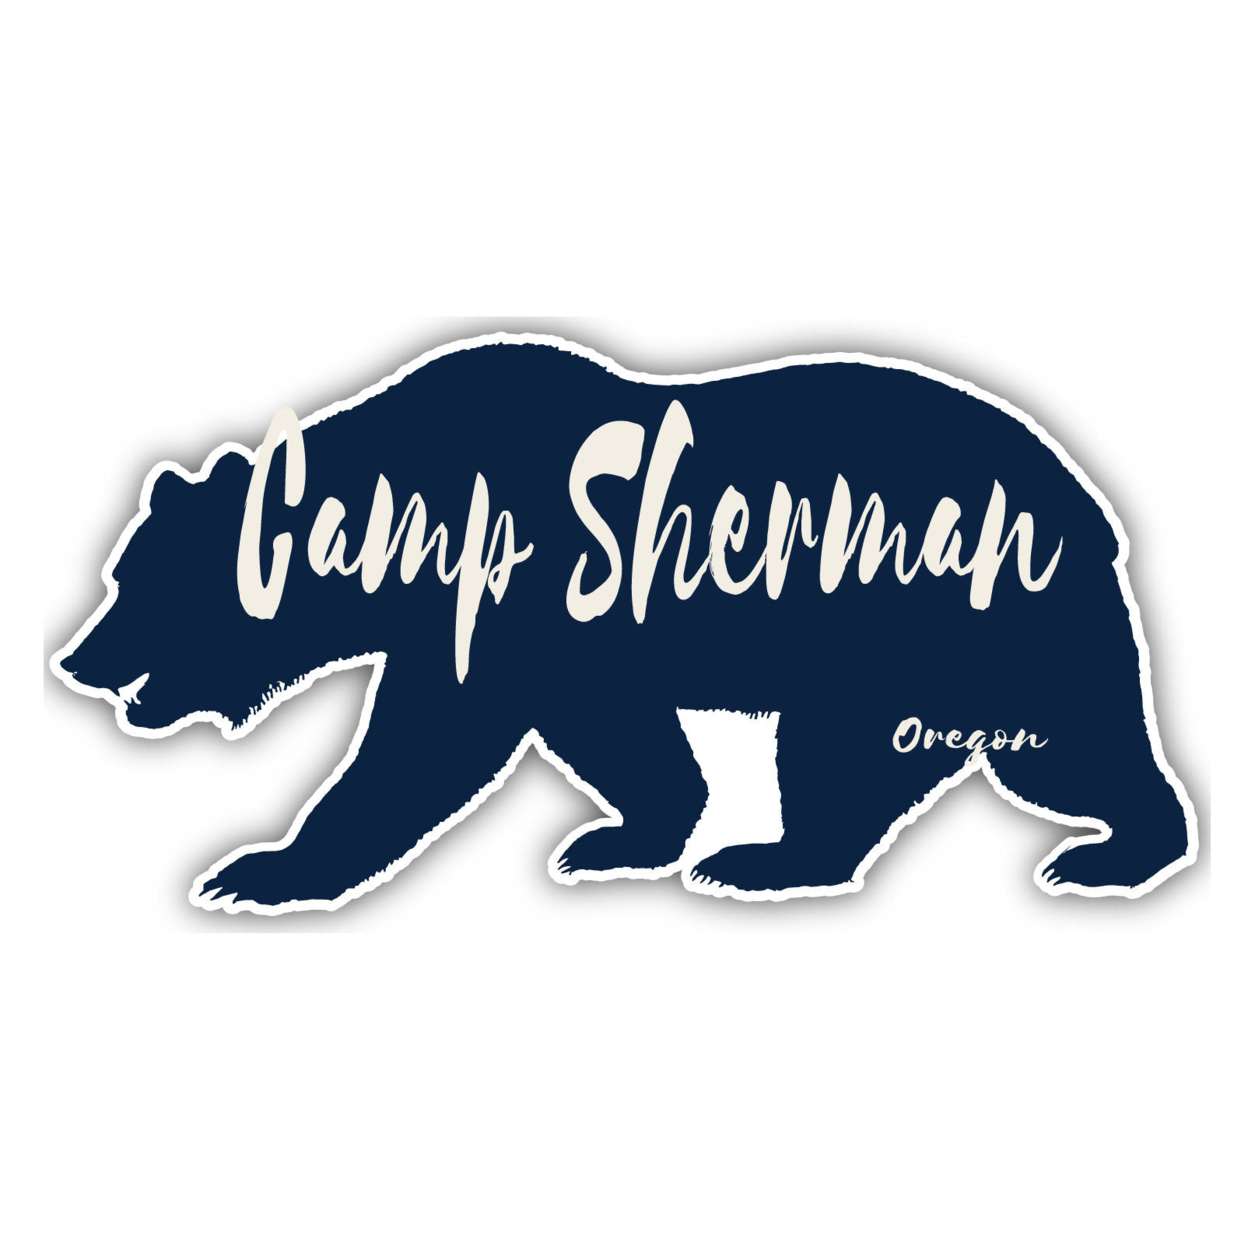 Camp Sherman Oregon Souvenir Decorative Stickers (Choose Theme And Size) - 4-Pack, 8-Inch, Bear